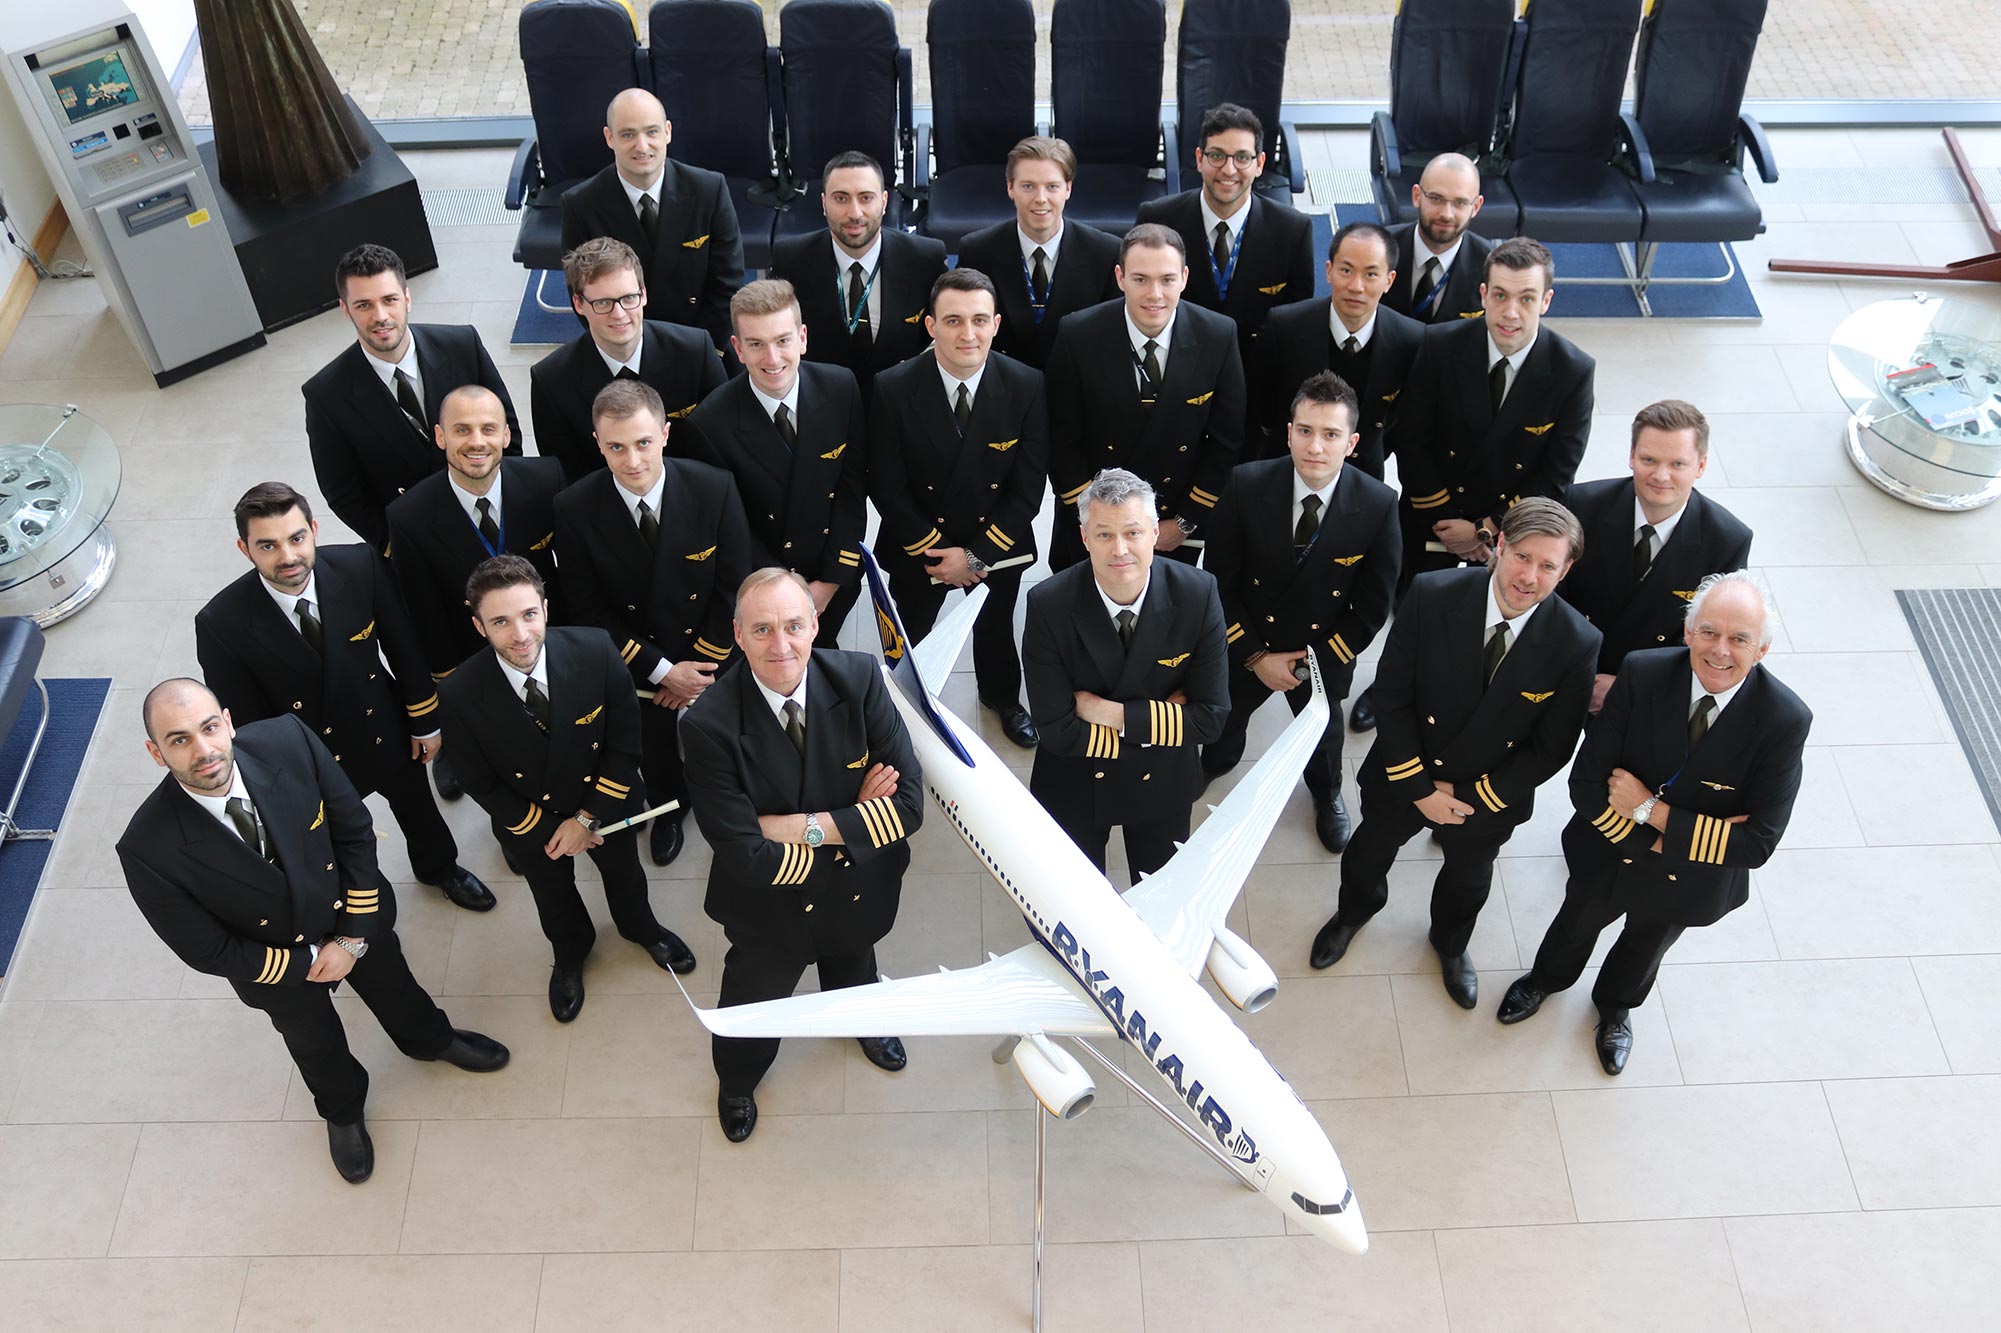 7 Mar – Another 27 Pilots Join Ryanair This Week | Ryanair's Corporate ...